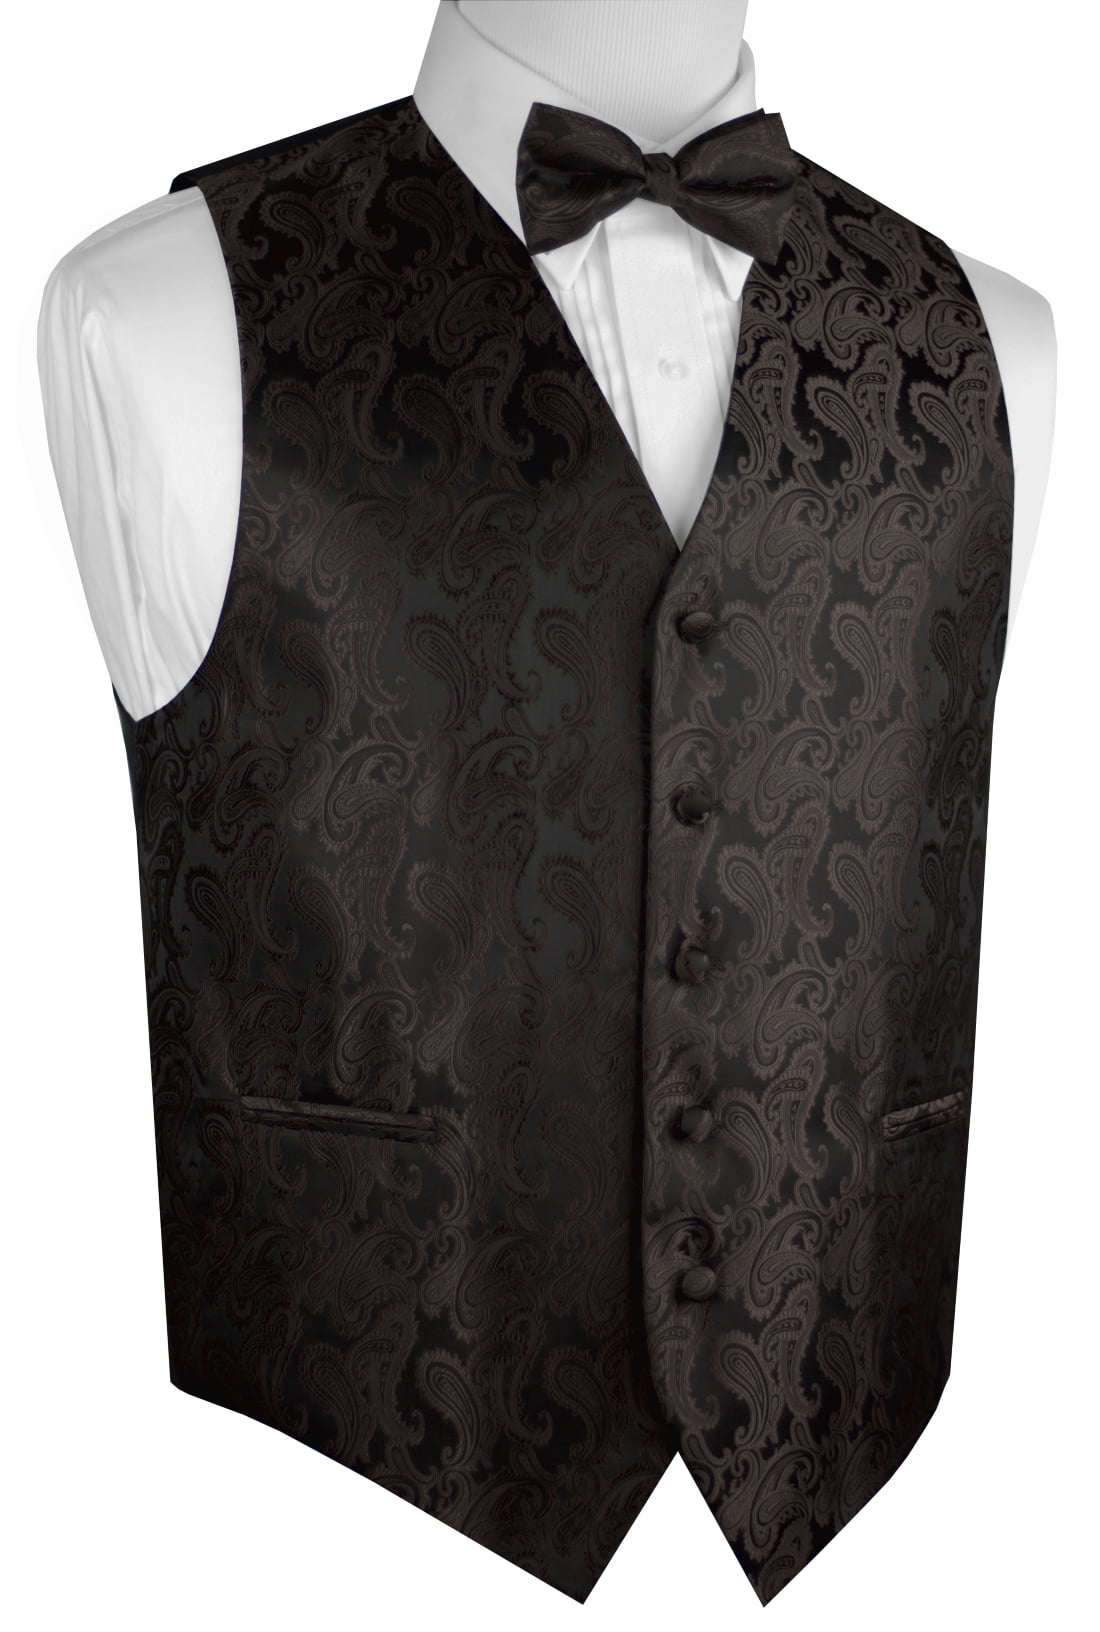 Mens Tuxedo Vest Bow-Tie & Hankie Set in Chocolate Italian Design 